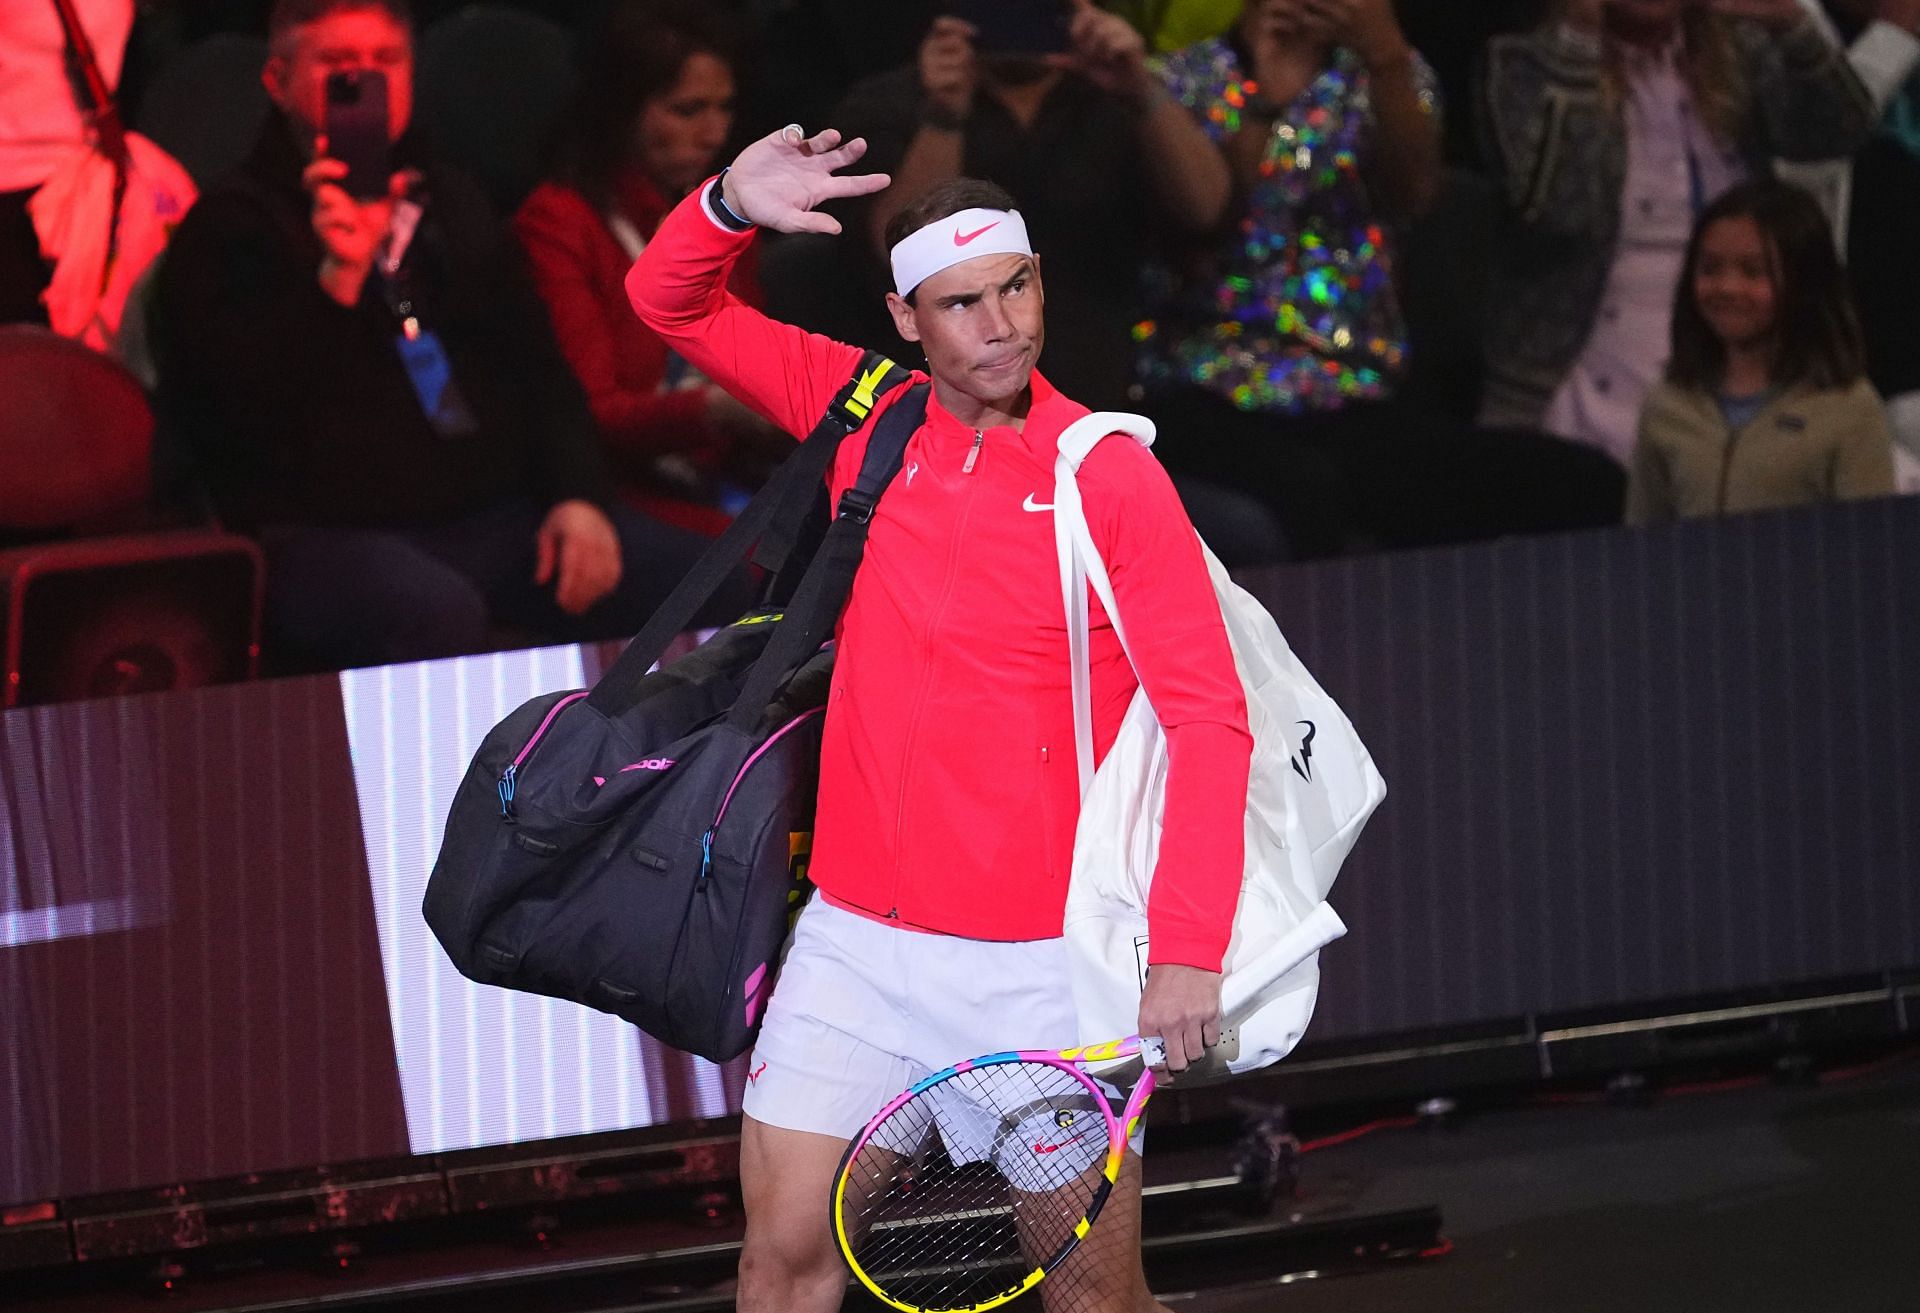 Rafael Nadal shows no signs of wavering health in Netflix exhibition loss